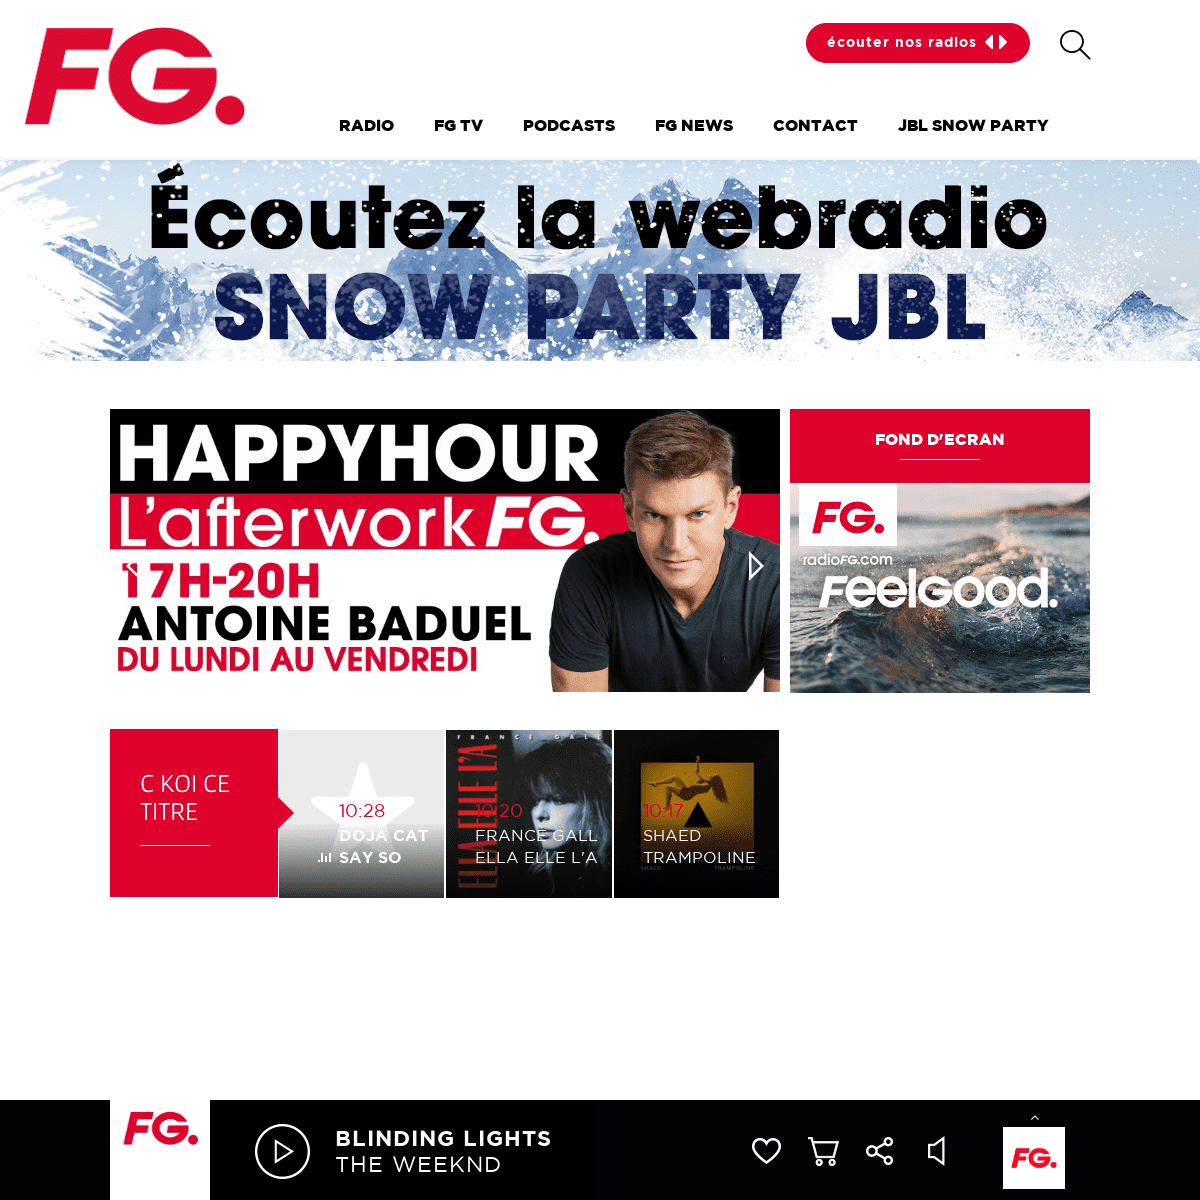 A complete backup of radiofg.com